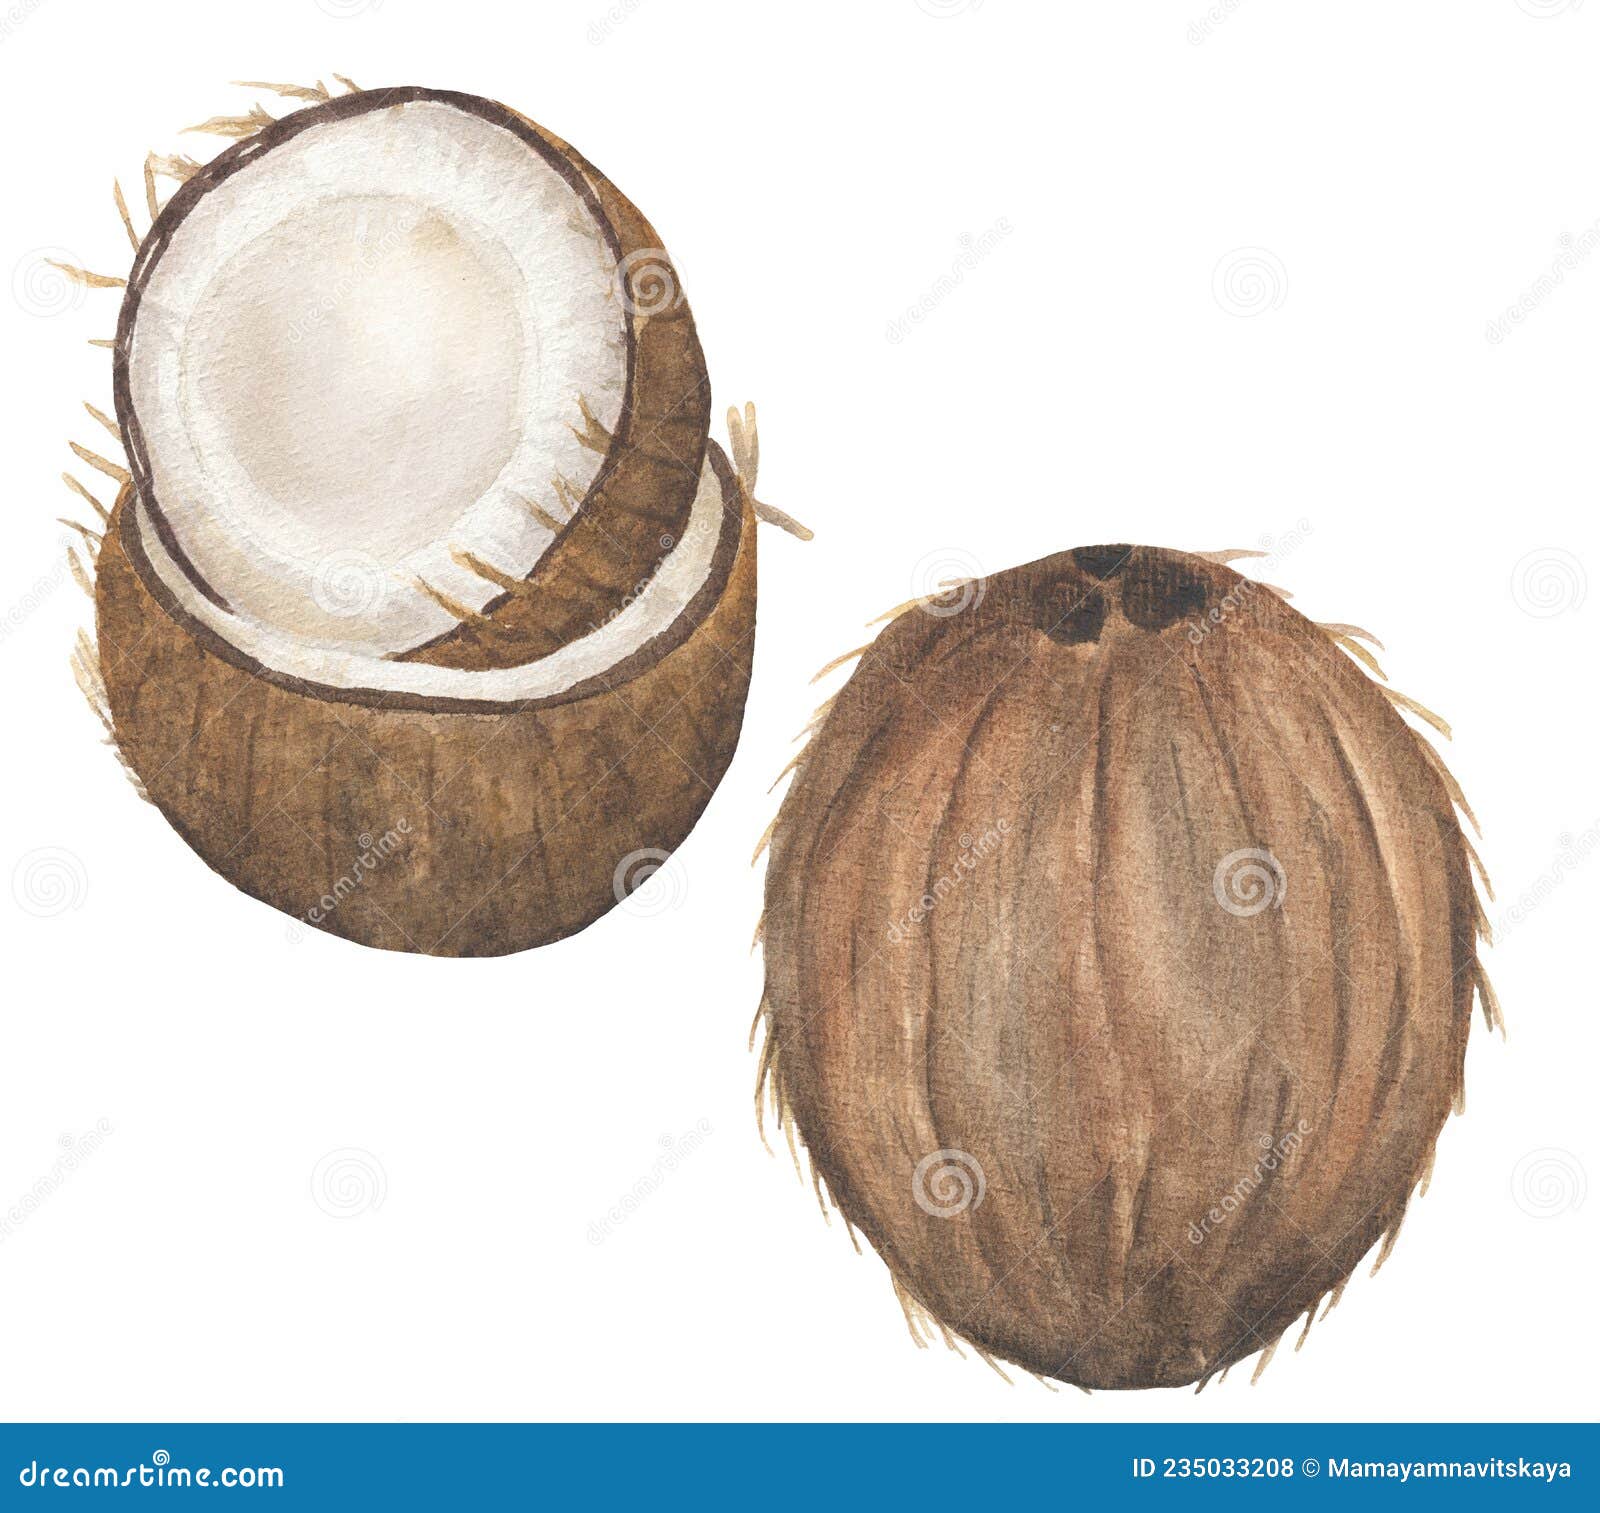 coconut fruit clip art